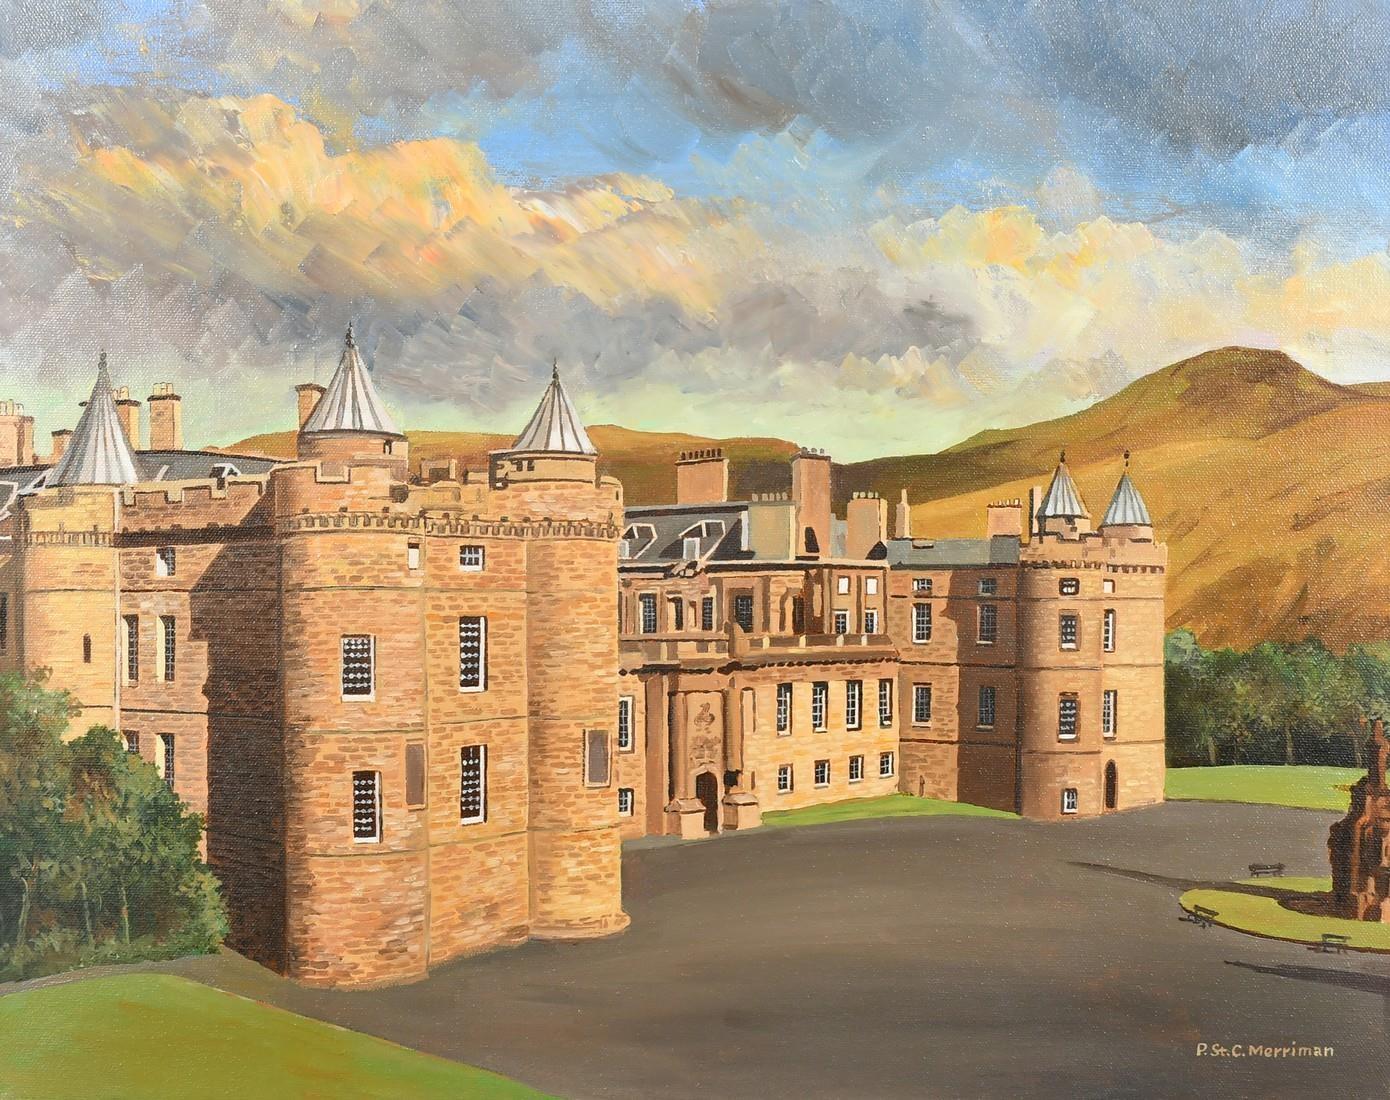 Landscape Painting Peter St. Clair Merriman - HolyRood Palace Scotland Royal Palace in Edinburgh Original Oil Painting